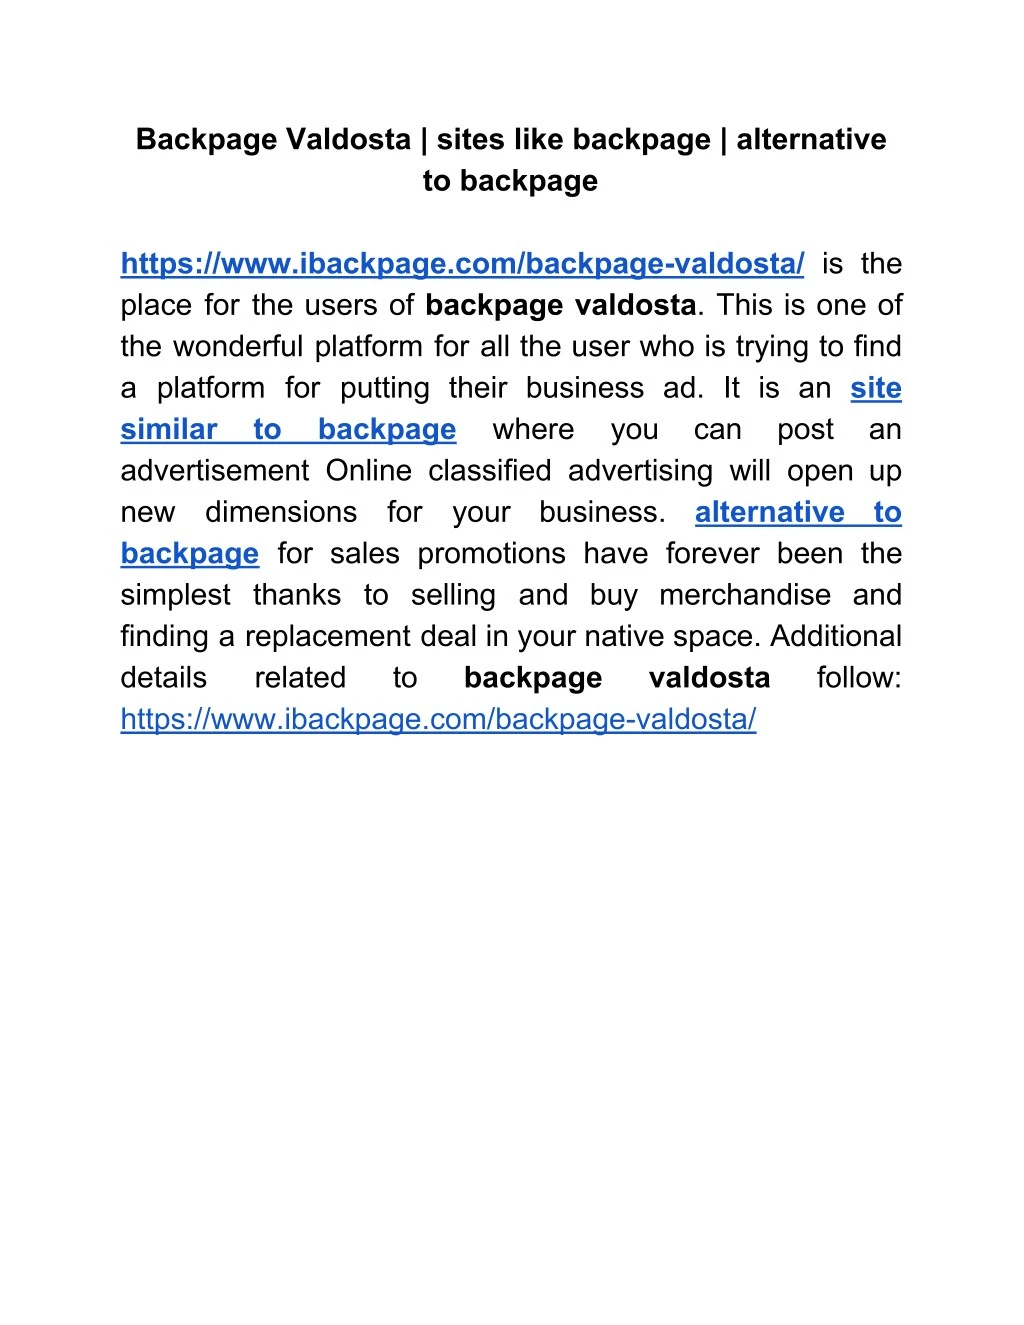 backpage valdosta sites like backpage alternative